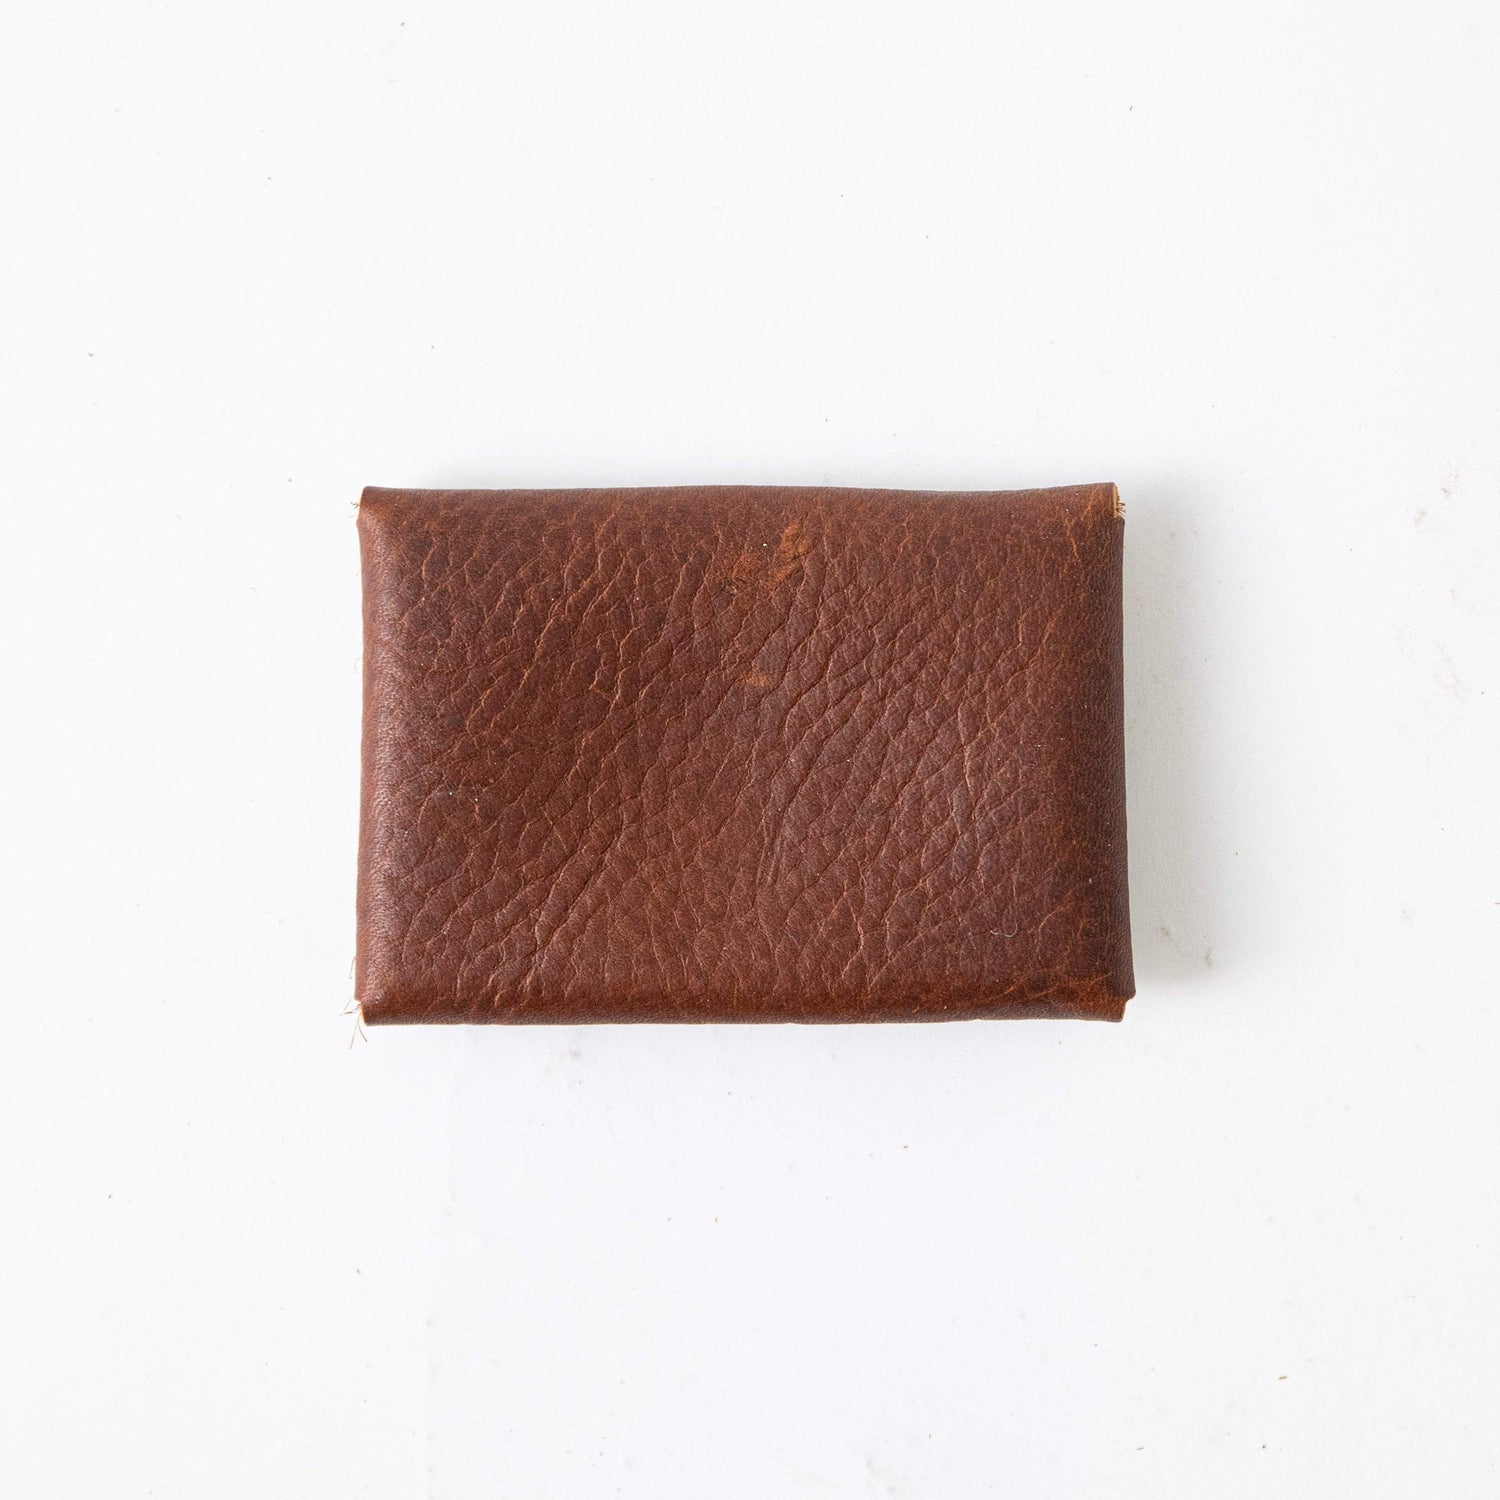 Tan Kodiak Card Envelope- card holder wallet - leather wallet made in America at KMM &amp; Co.